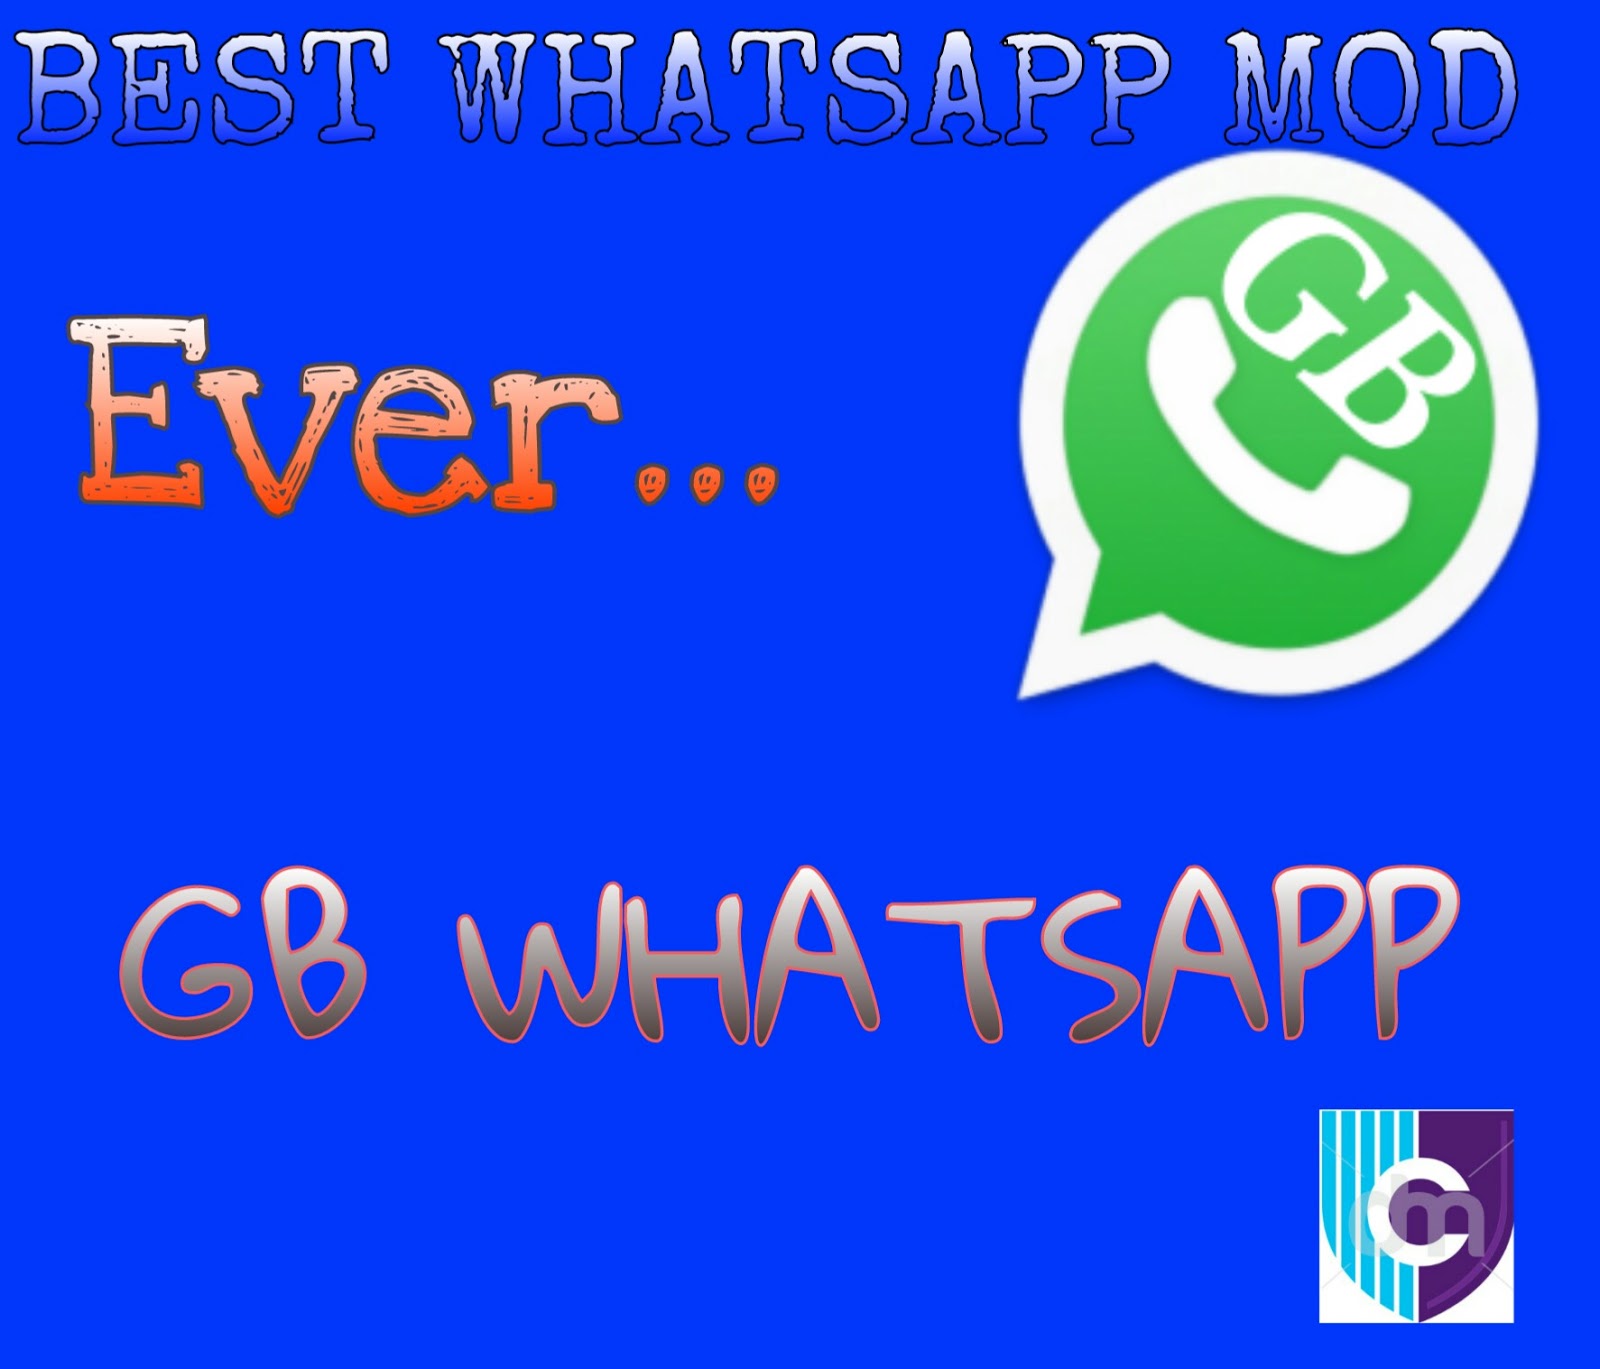 download gb whatsapp latest version 2020